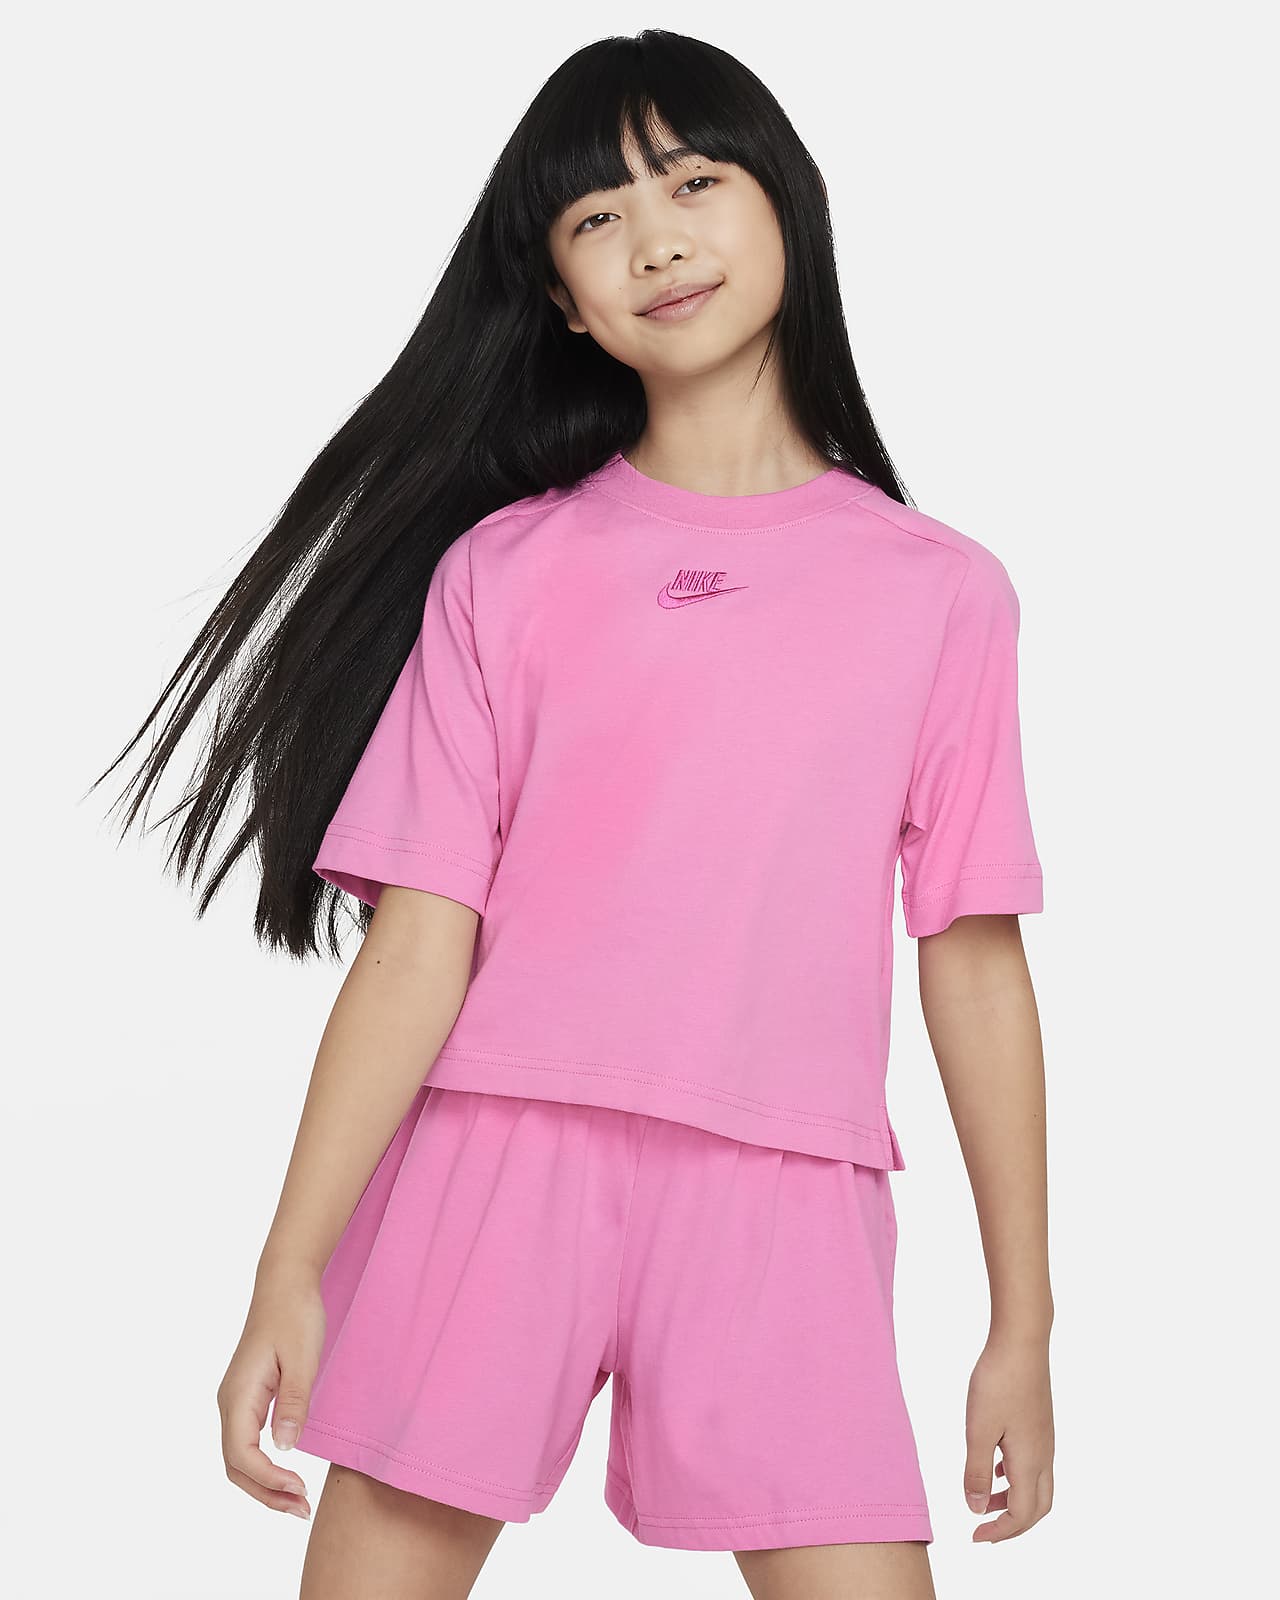 Nike Sportswear Older Kids' (Girls') Short-Sleeve Top. Nike LU